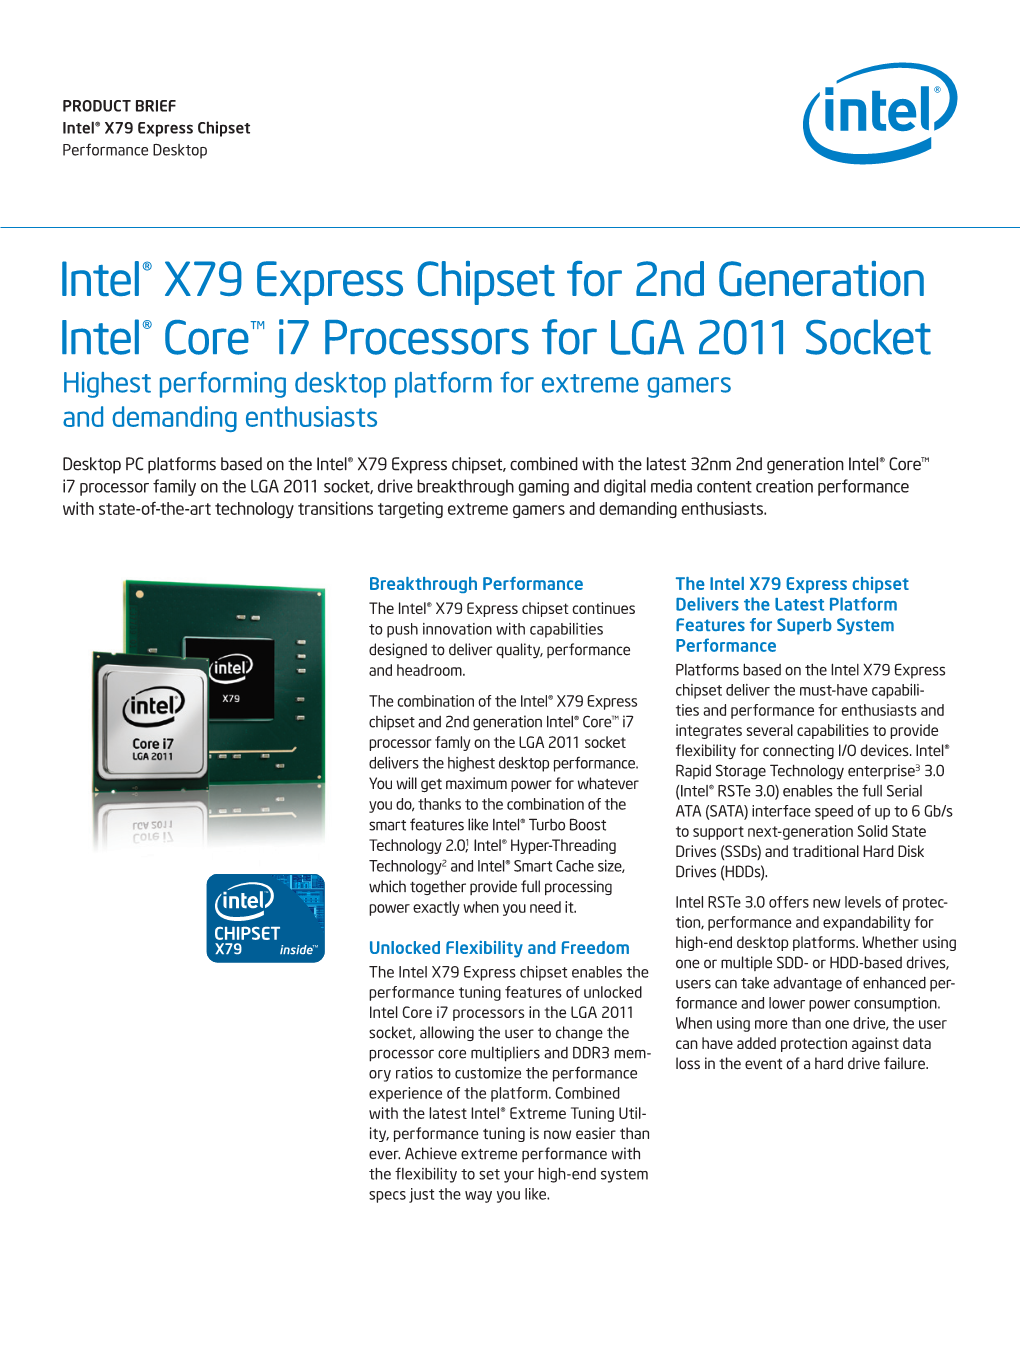 Intel® X79 Express Chipset for 2Nd Generation Intel® Core™ I7 Processors for LGA 2011 Socket